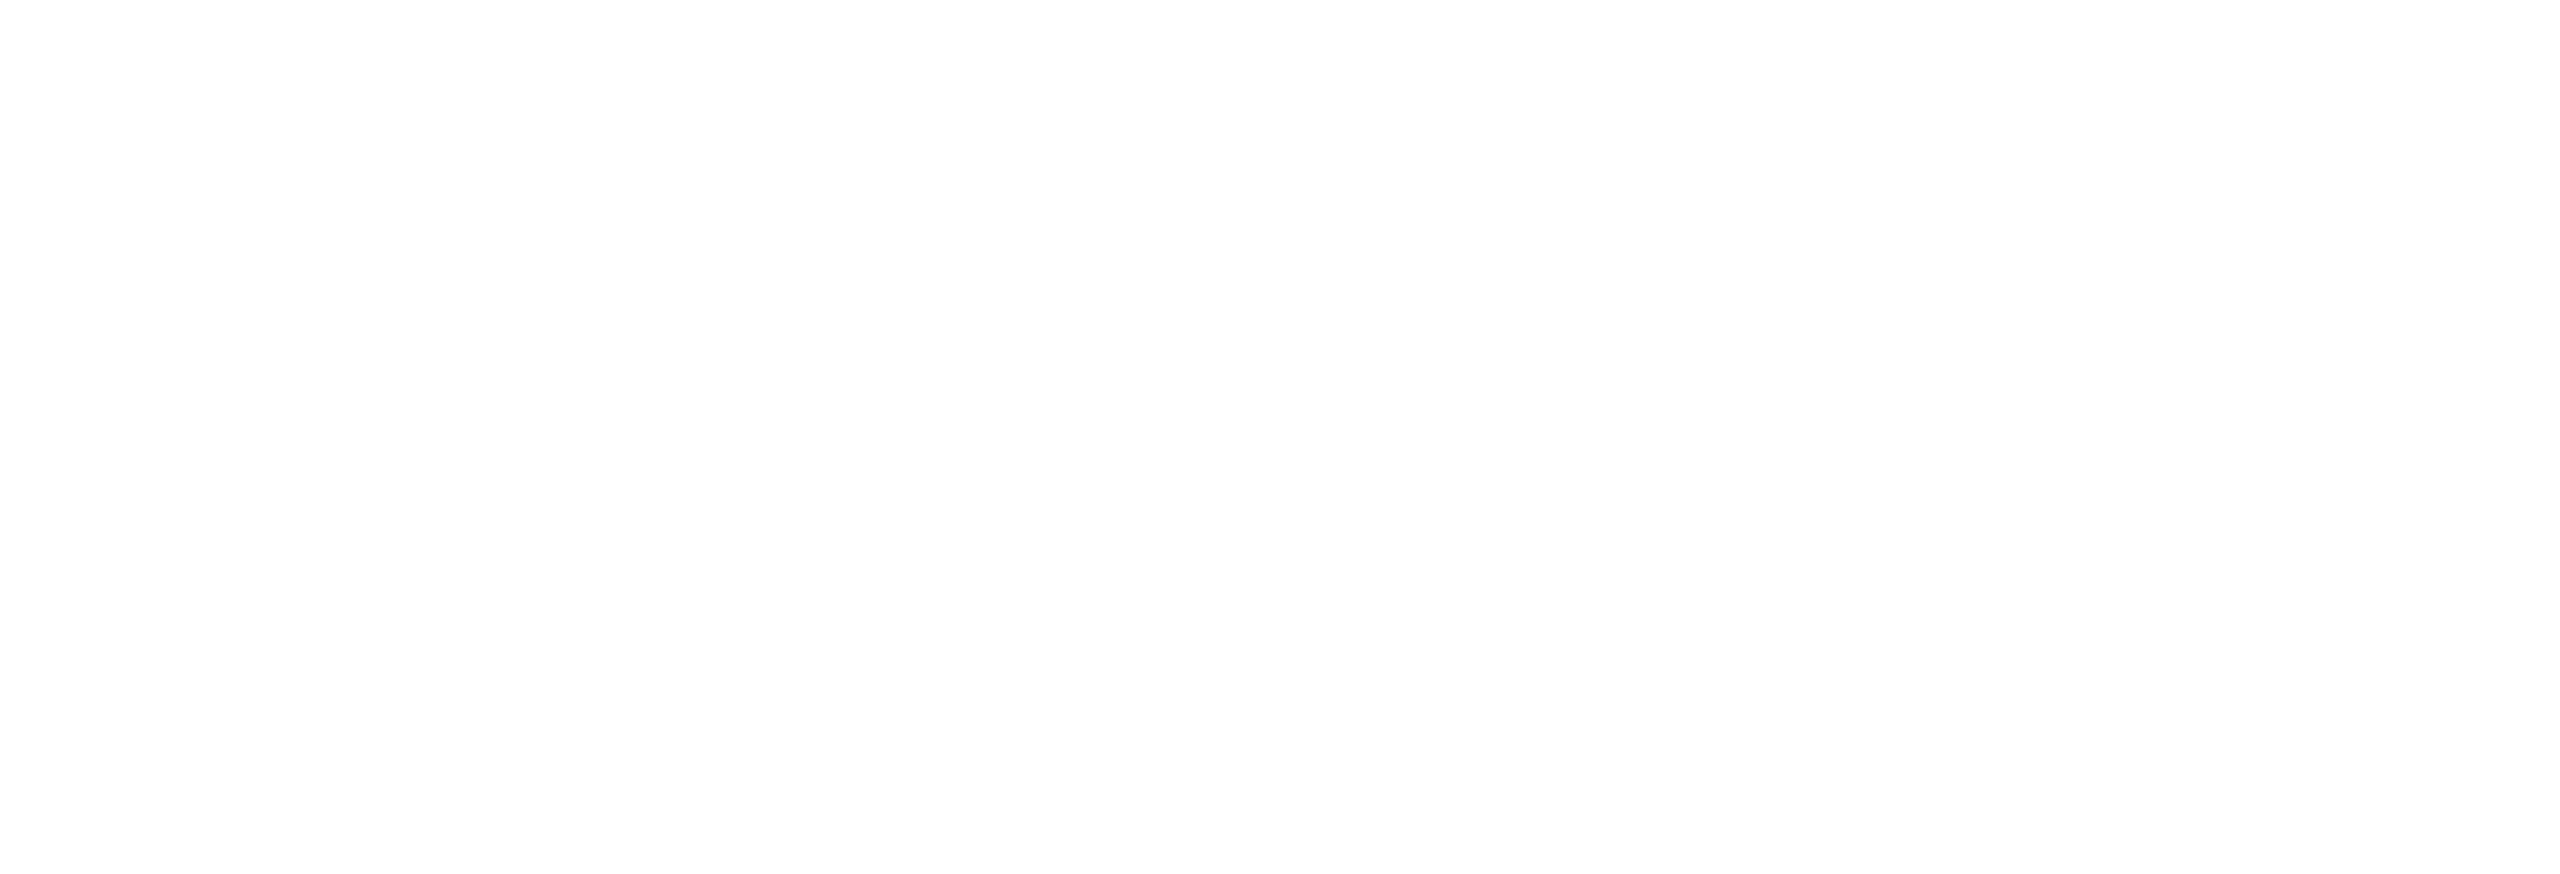 MES + PC integration + part list program - all integrated as standard. Software: 0,00 €